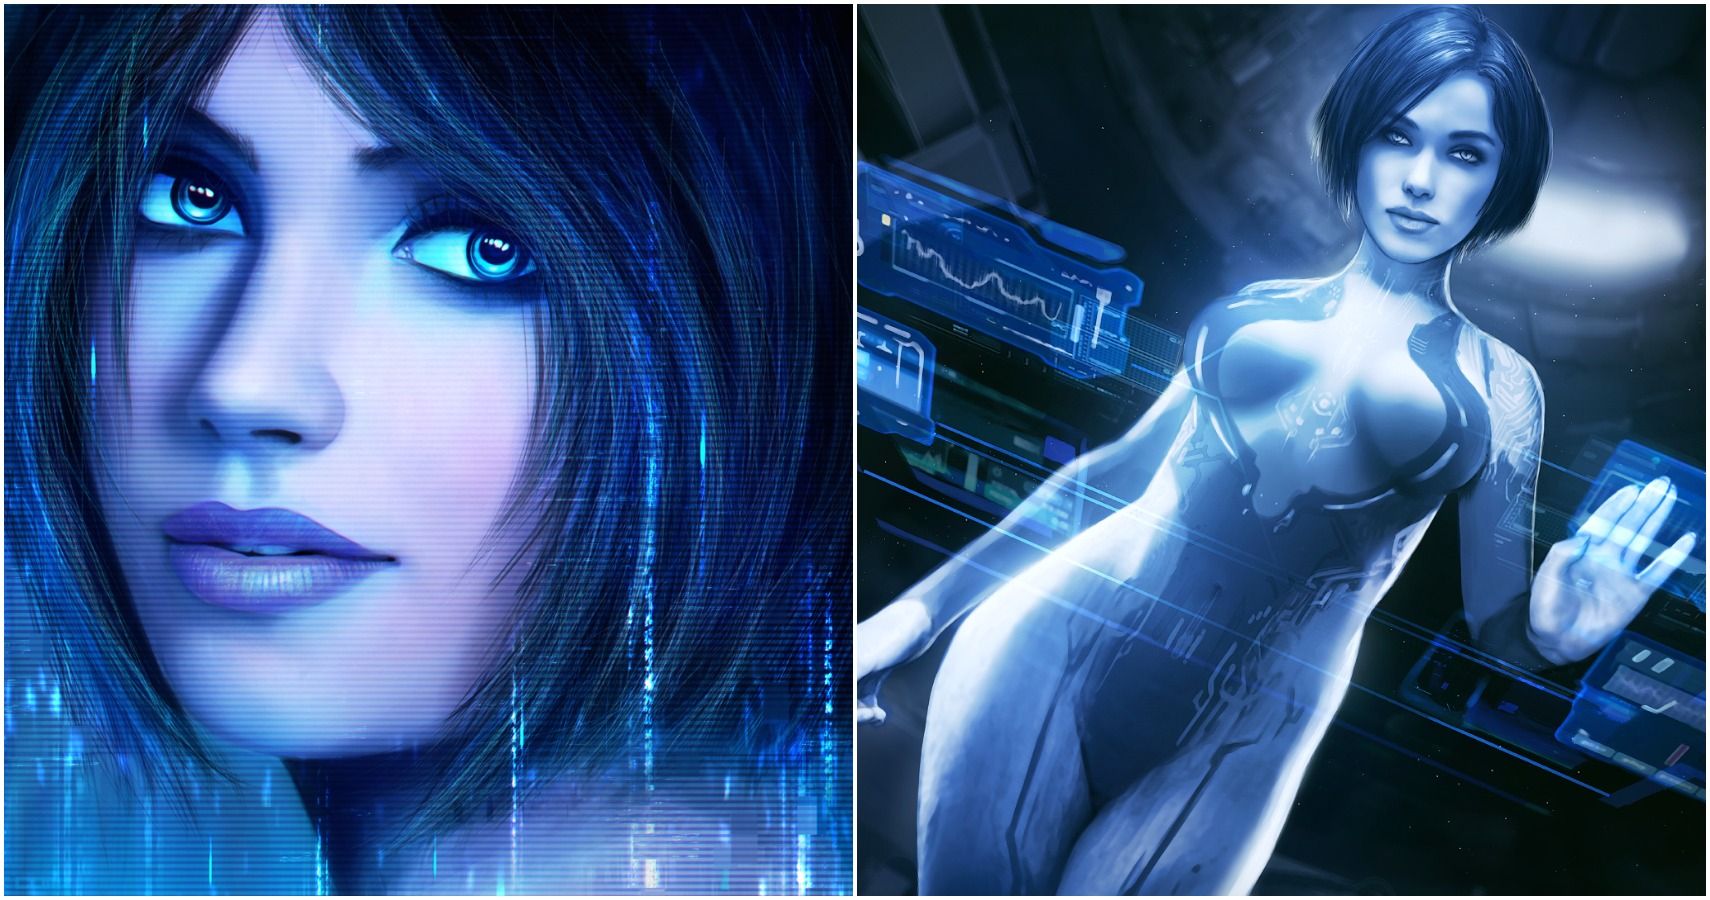 Halo 10 Pieces Of Cortana Fan Art We Adore TheGamer.